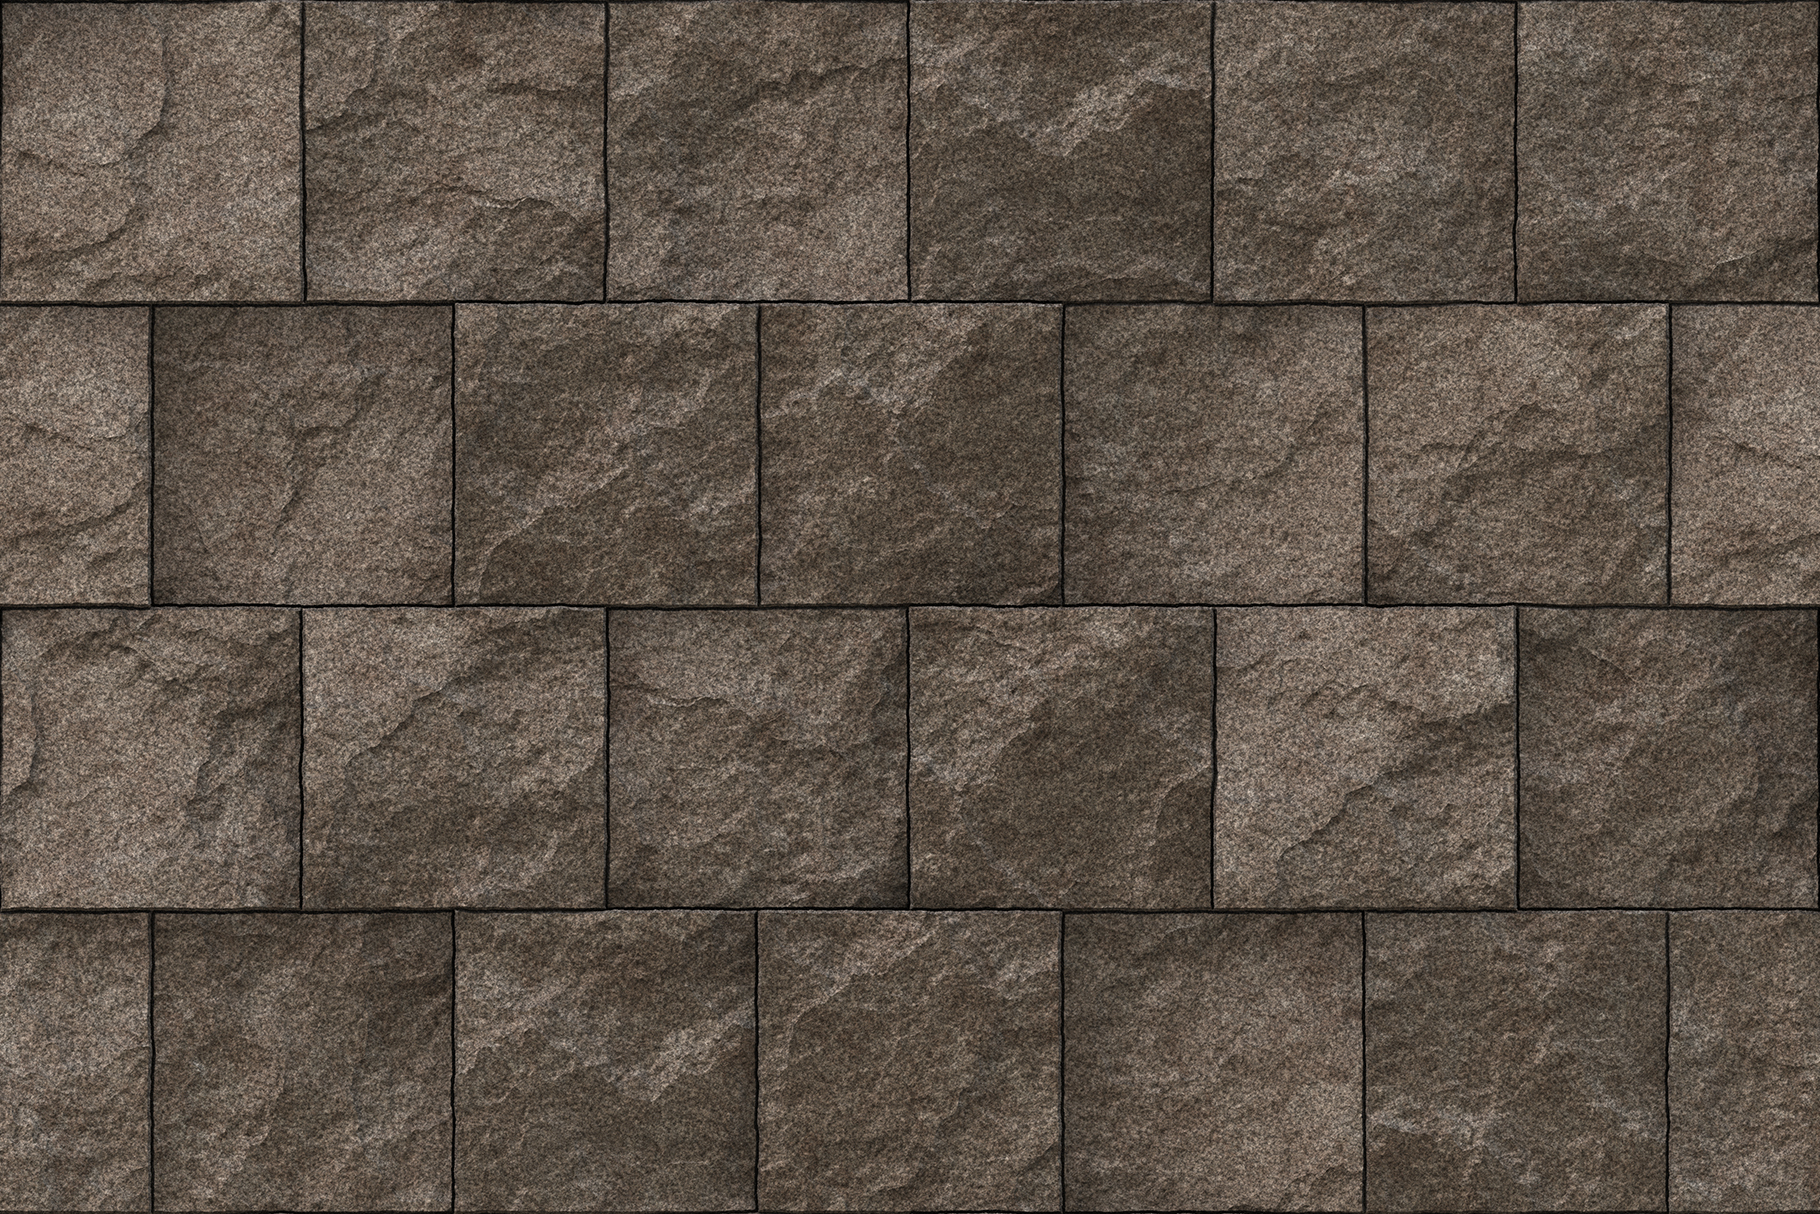 10 Stone Block Wall Textures Textures World